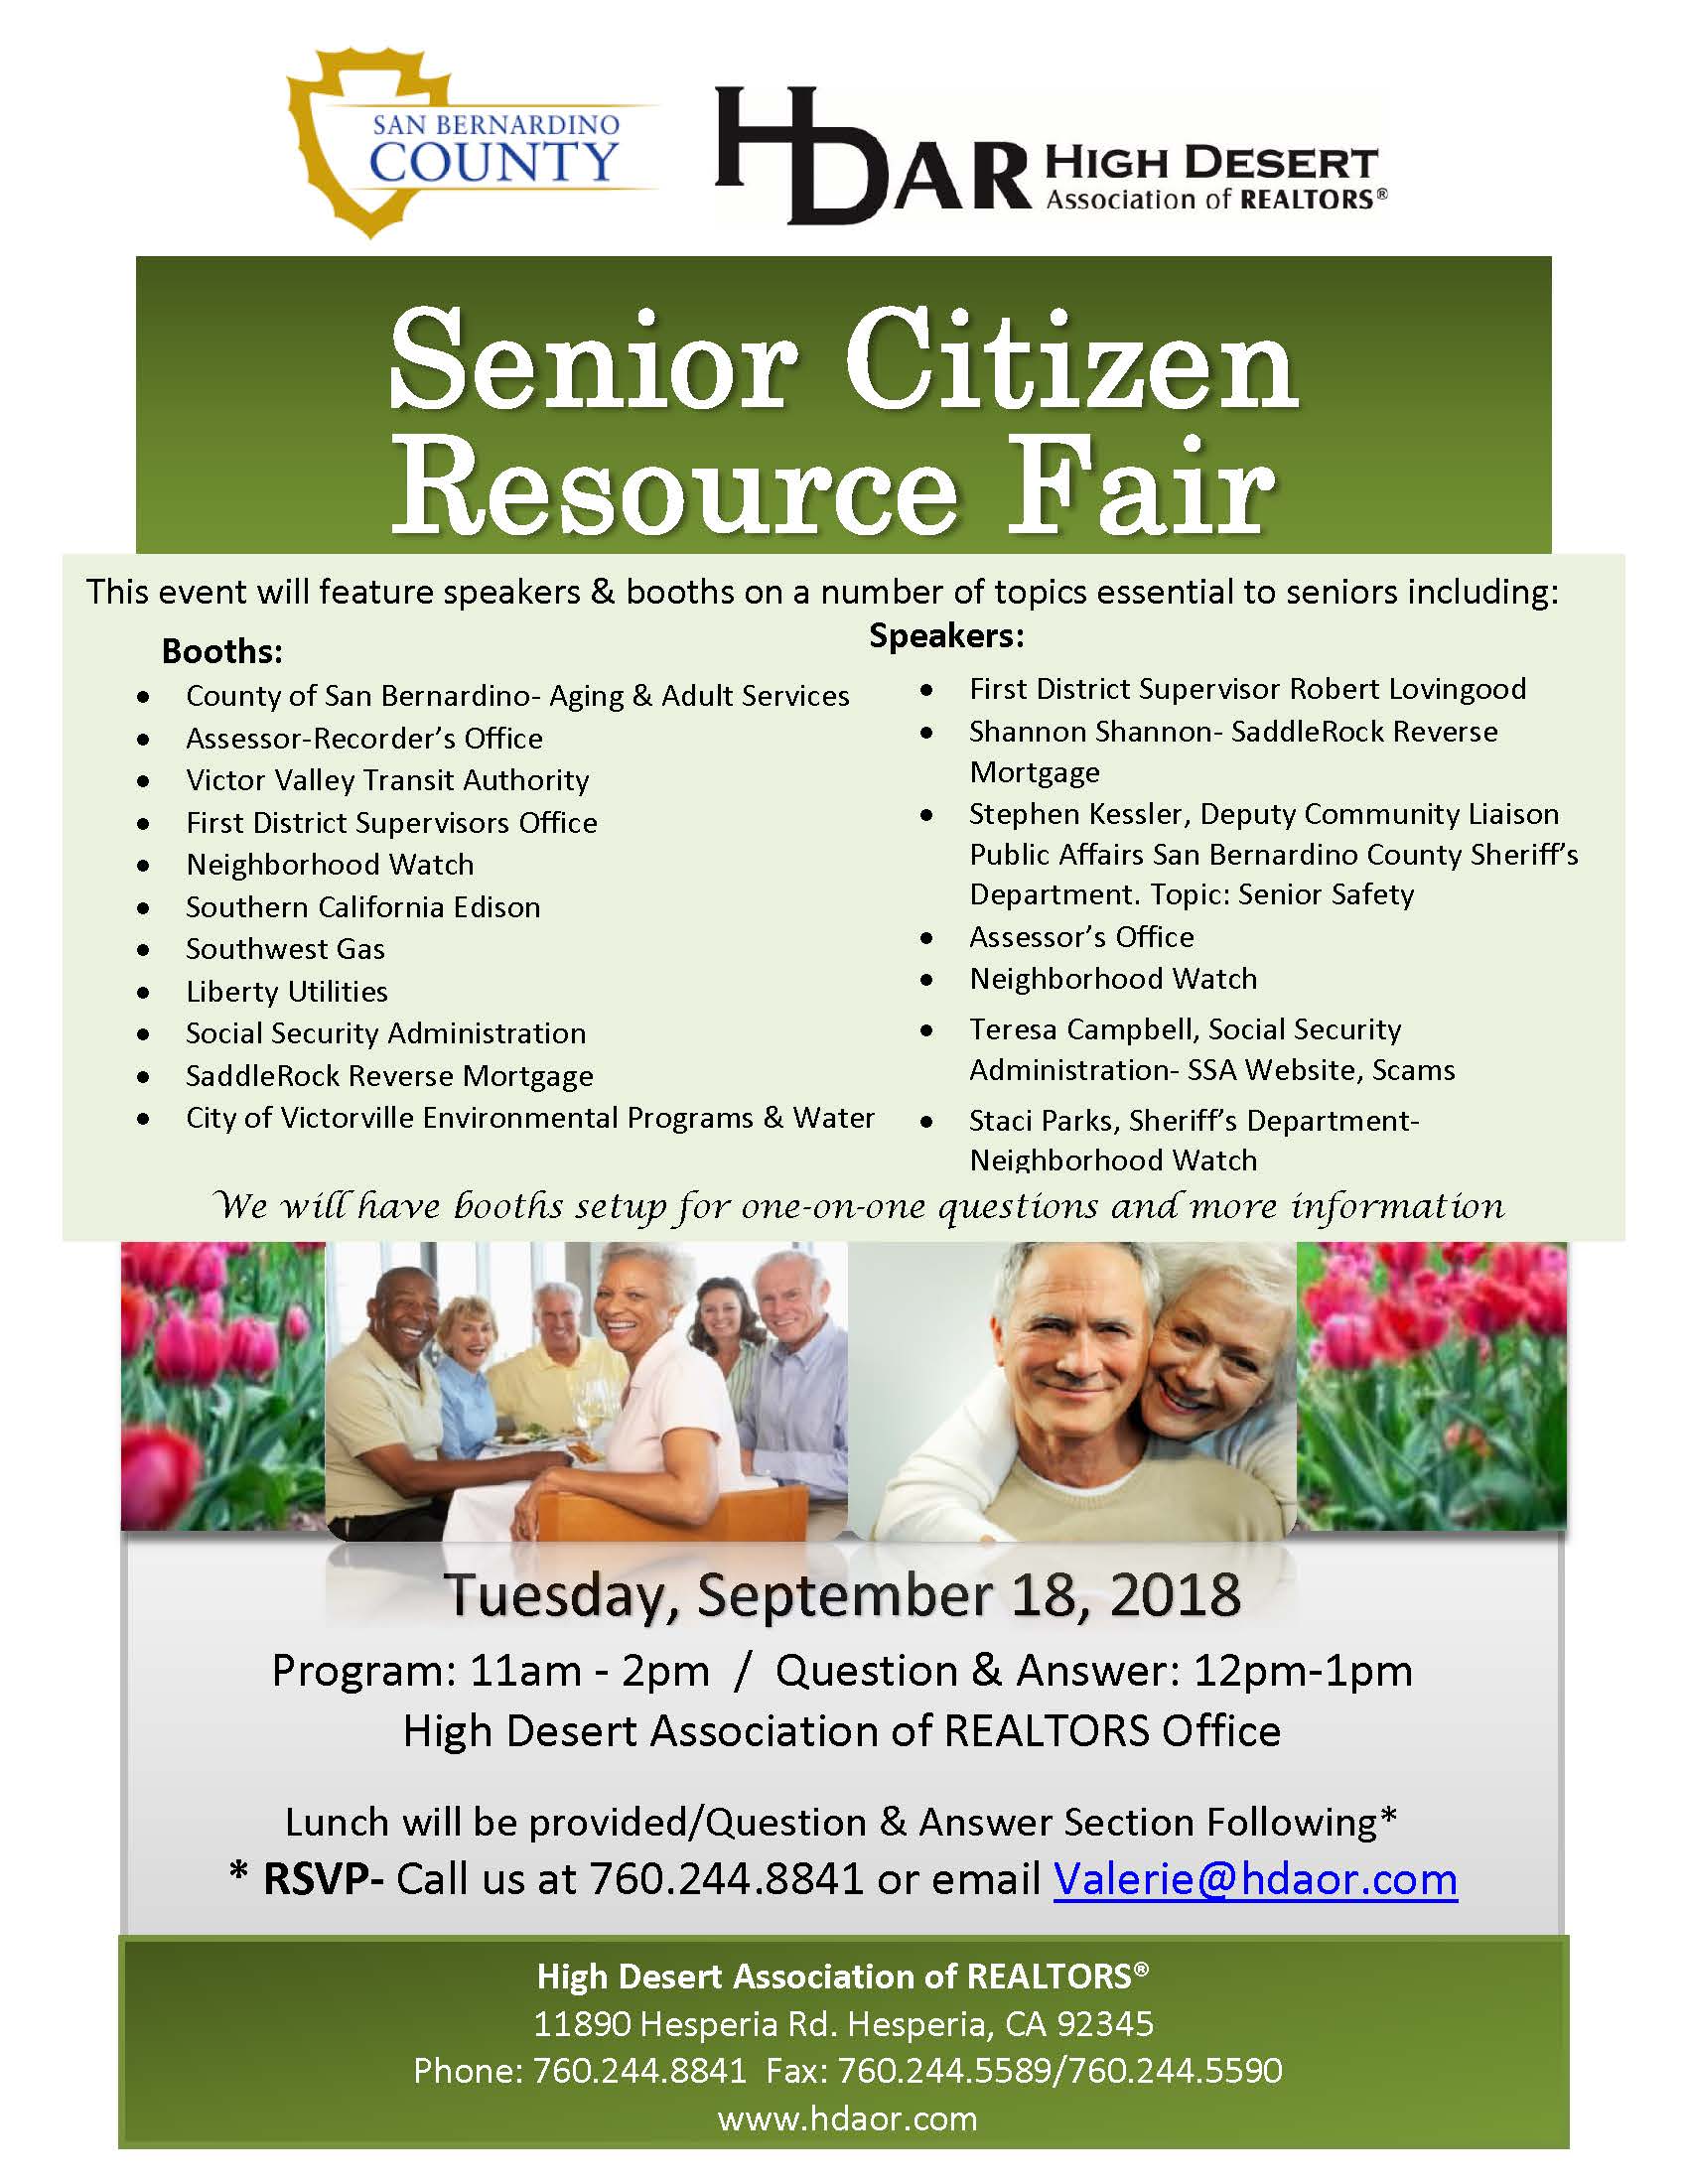 Senior Citizen Resources